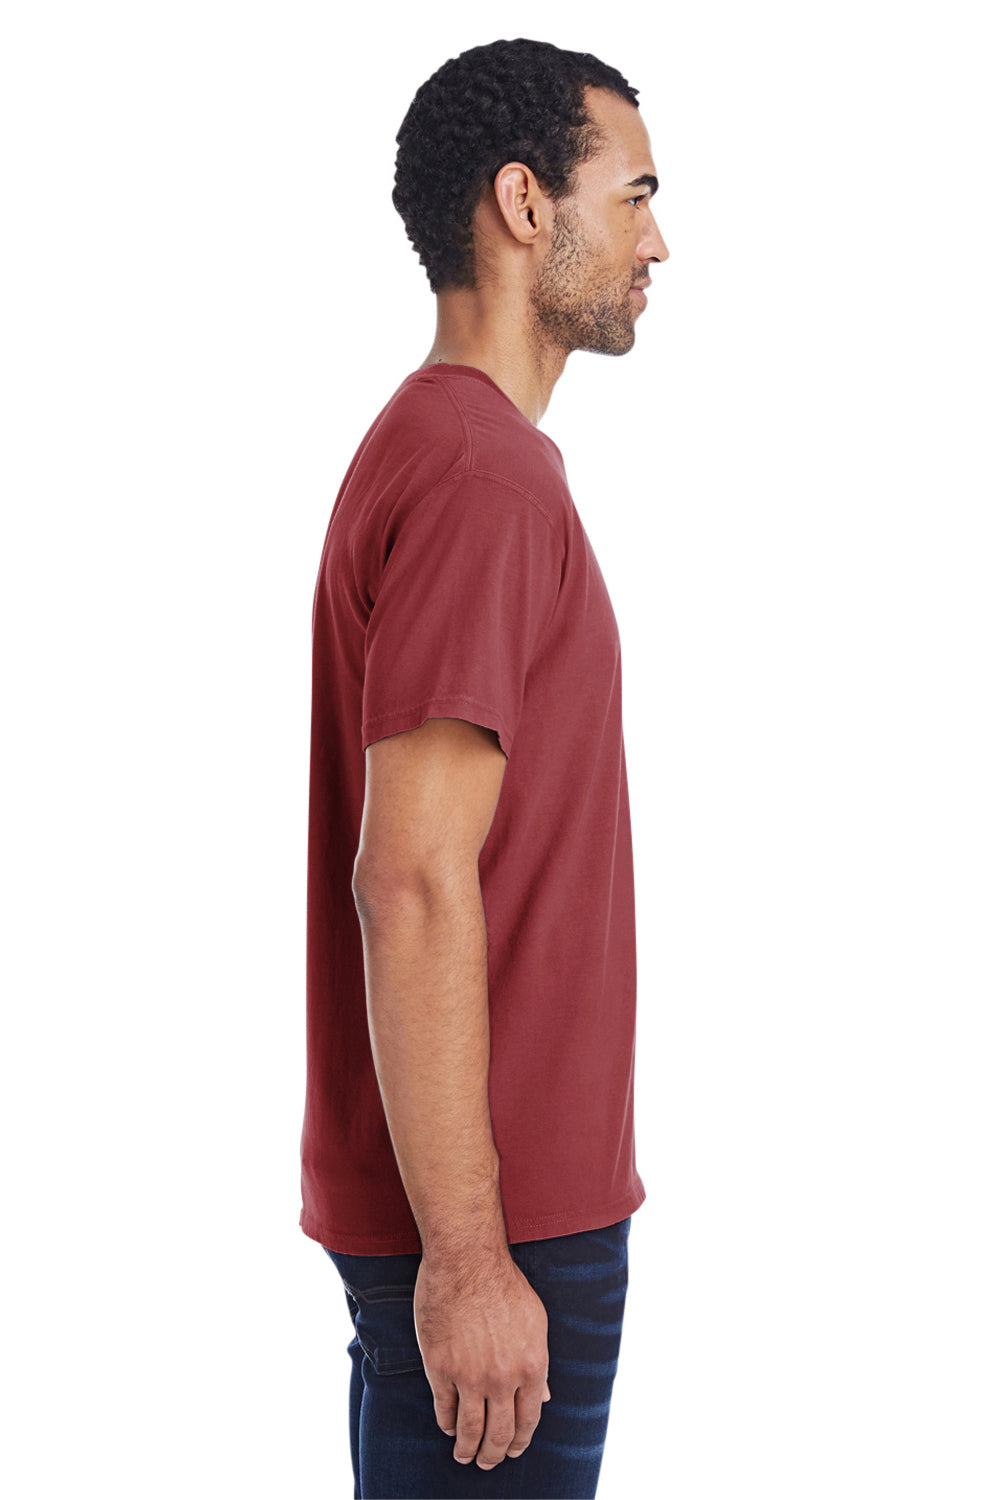 ComfortWash by Hanes GDH150 Short Sleeve Crewneck T-Shirt w/ Pocket Cayenne Red Side